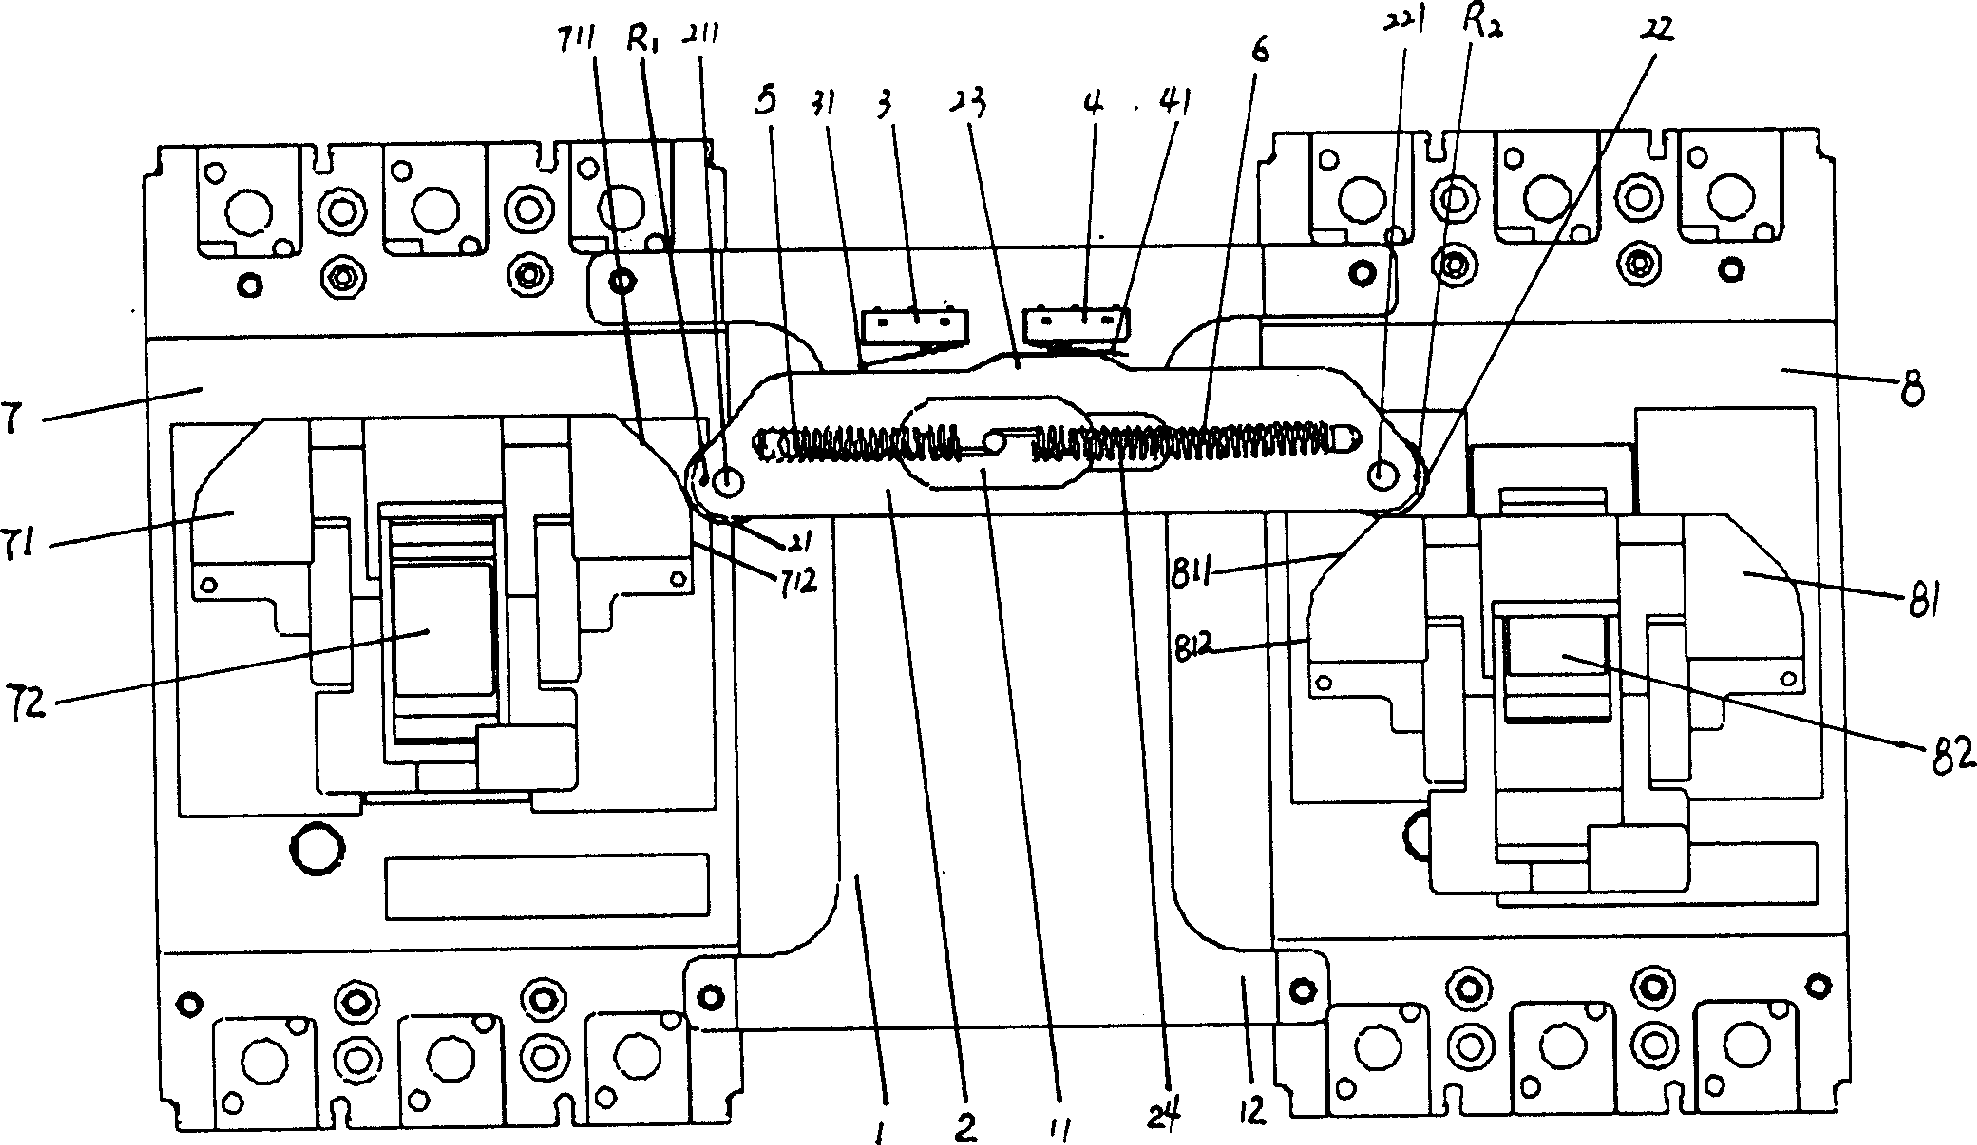 Circuit breaker interlocking device